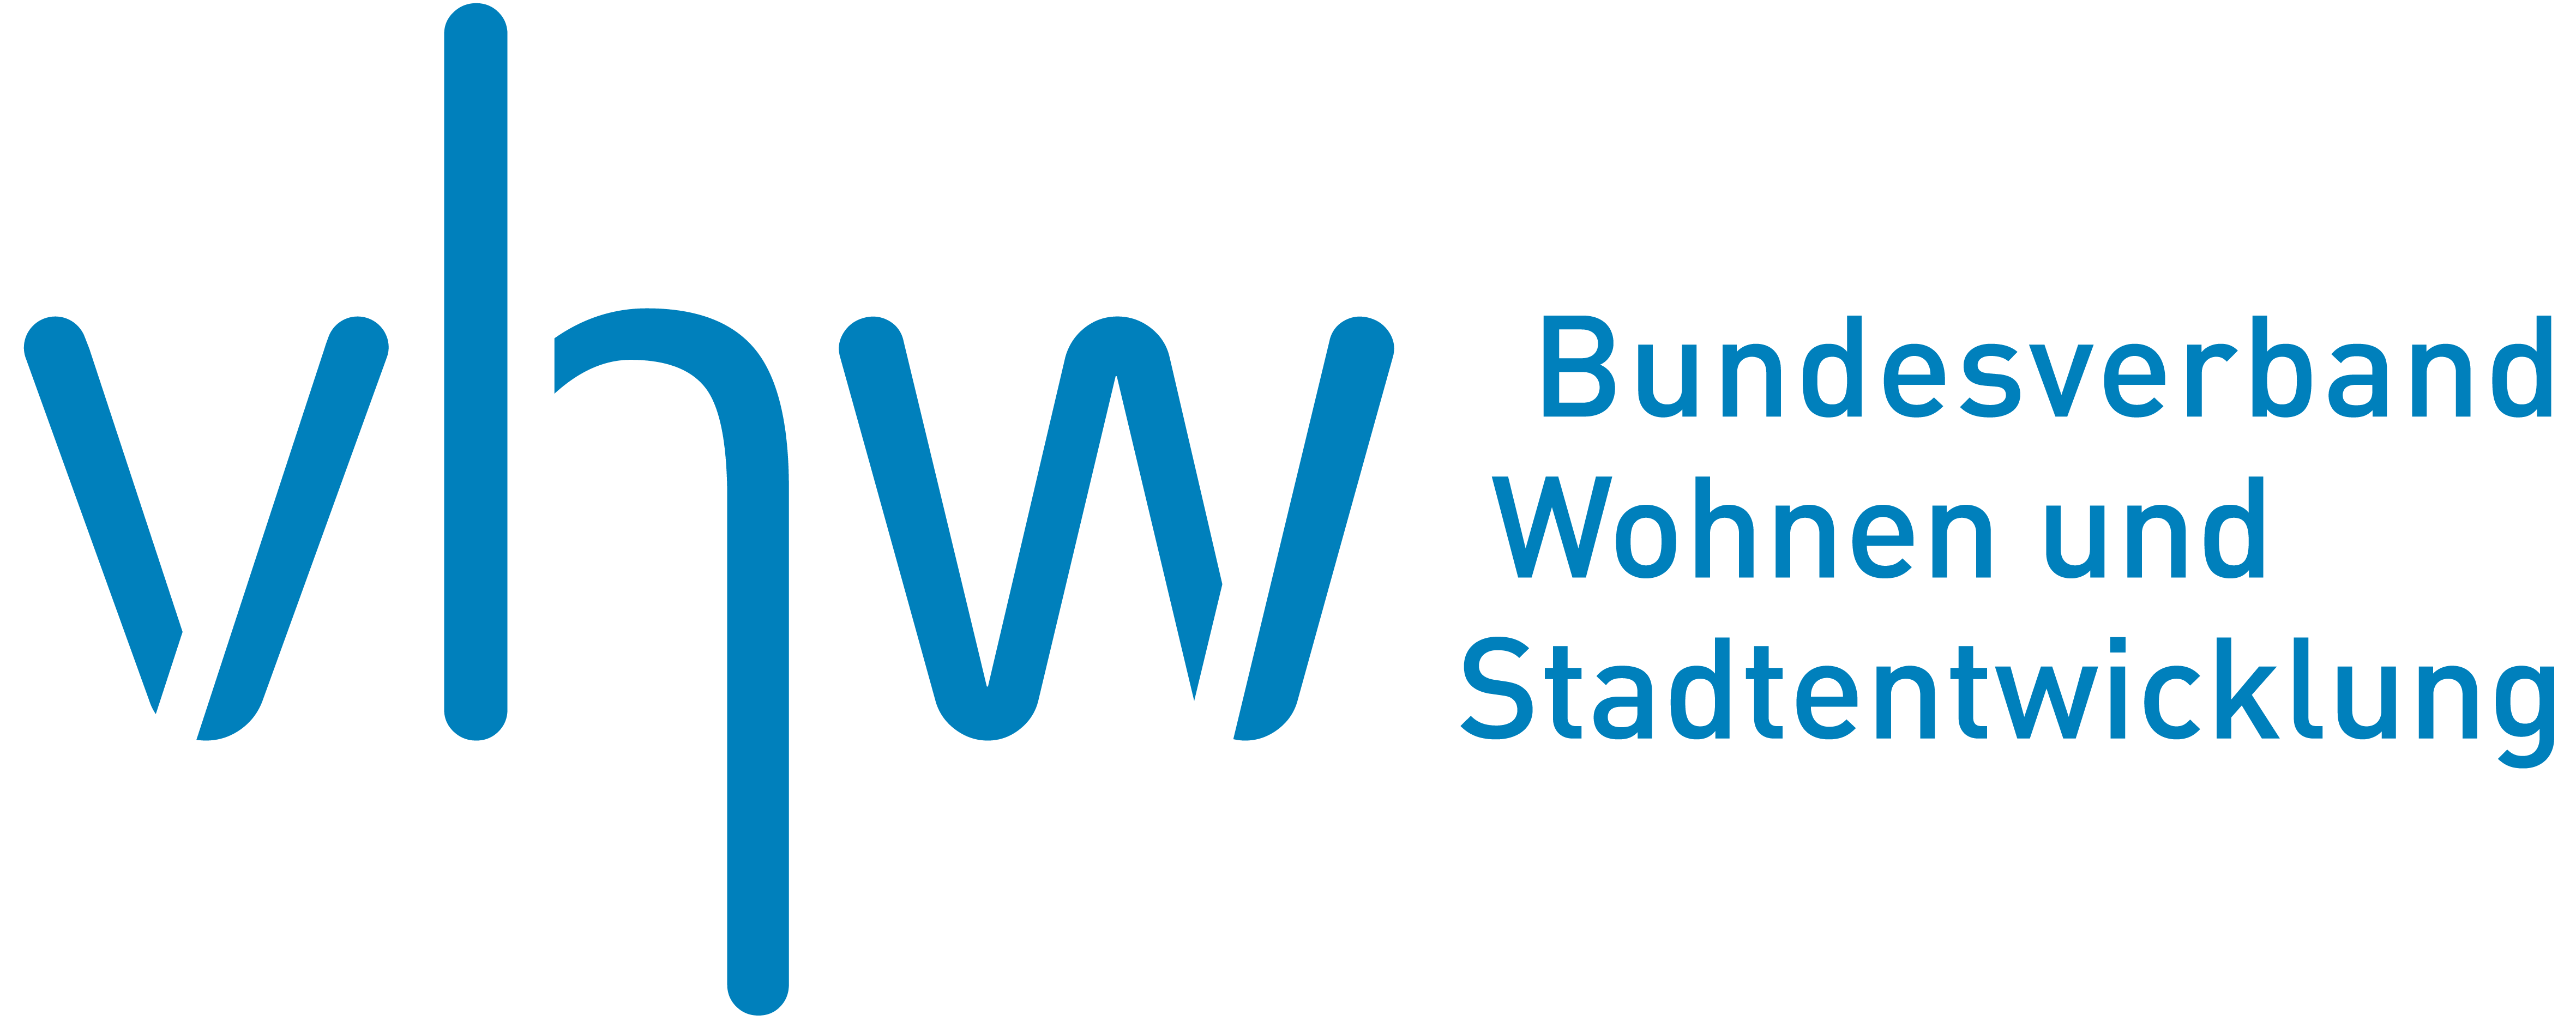 Logo vhw